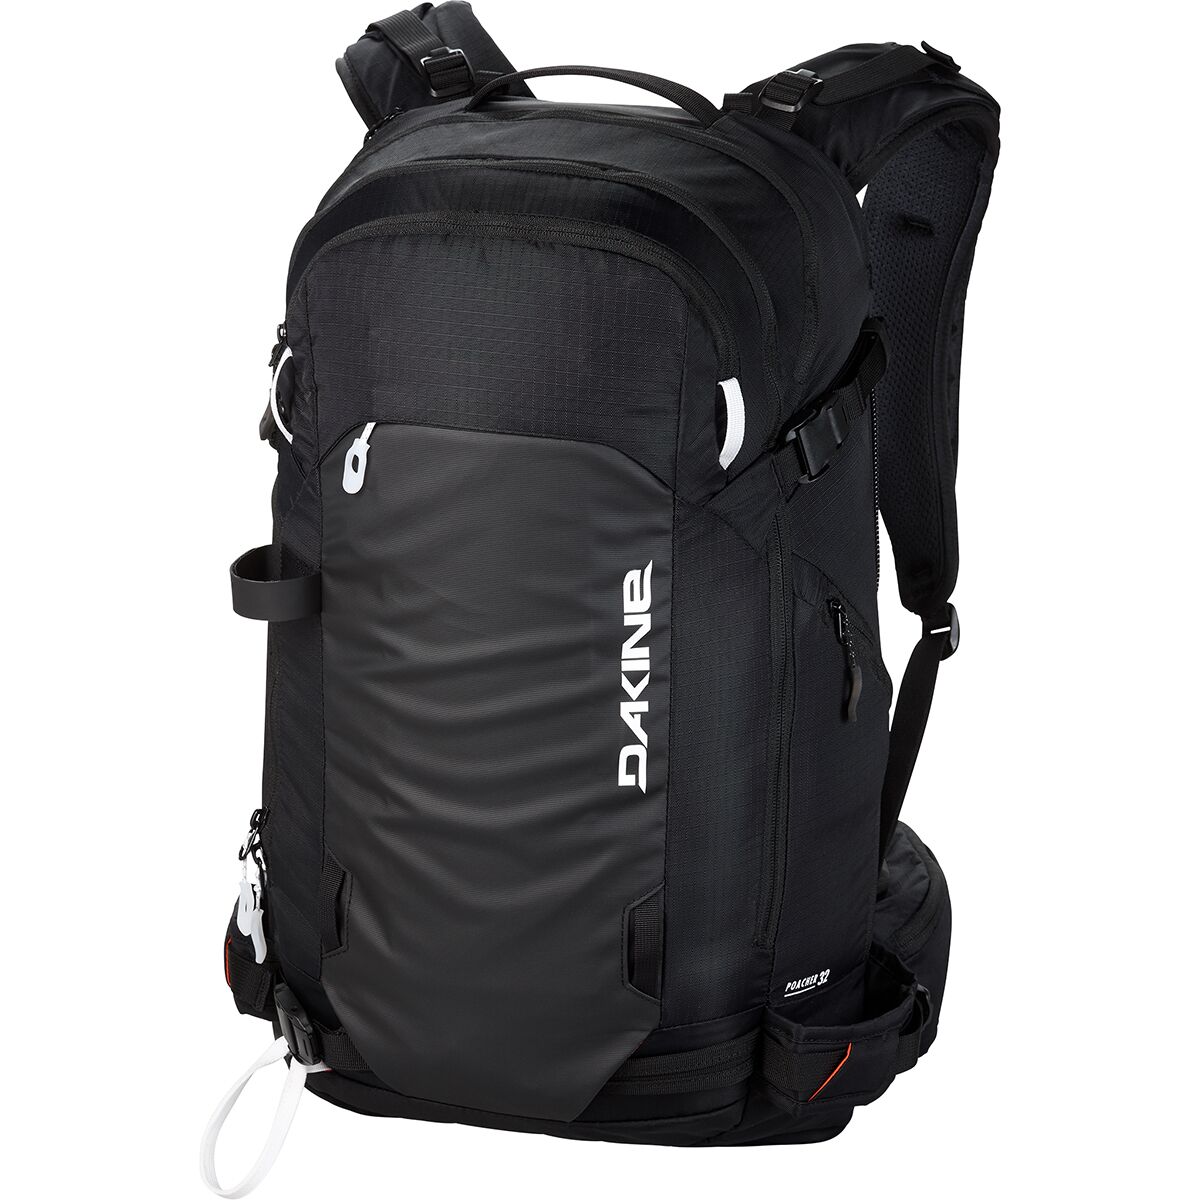 DAKINE Poacher 32L Backpack